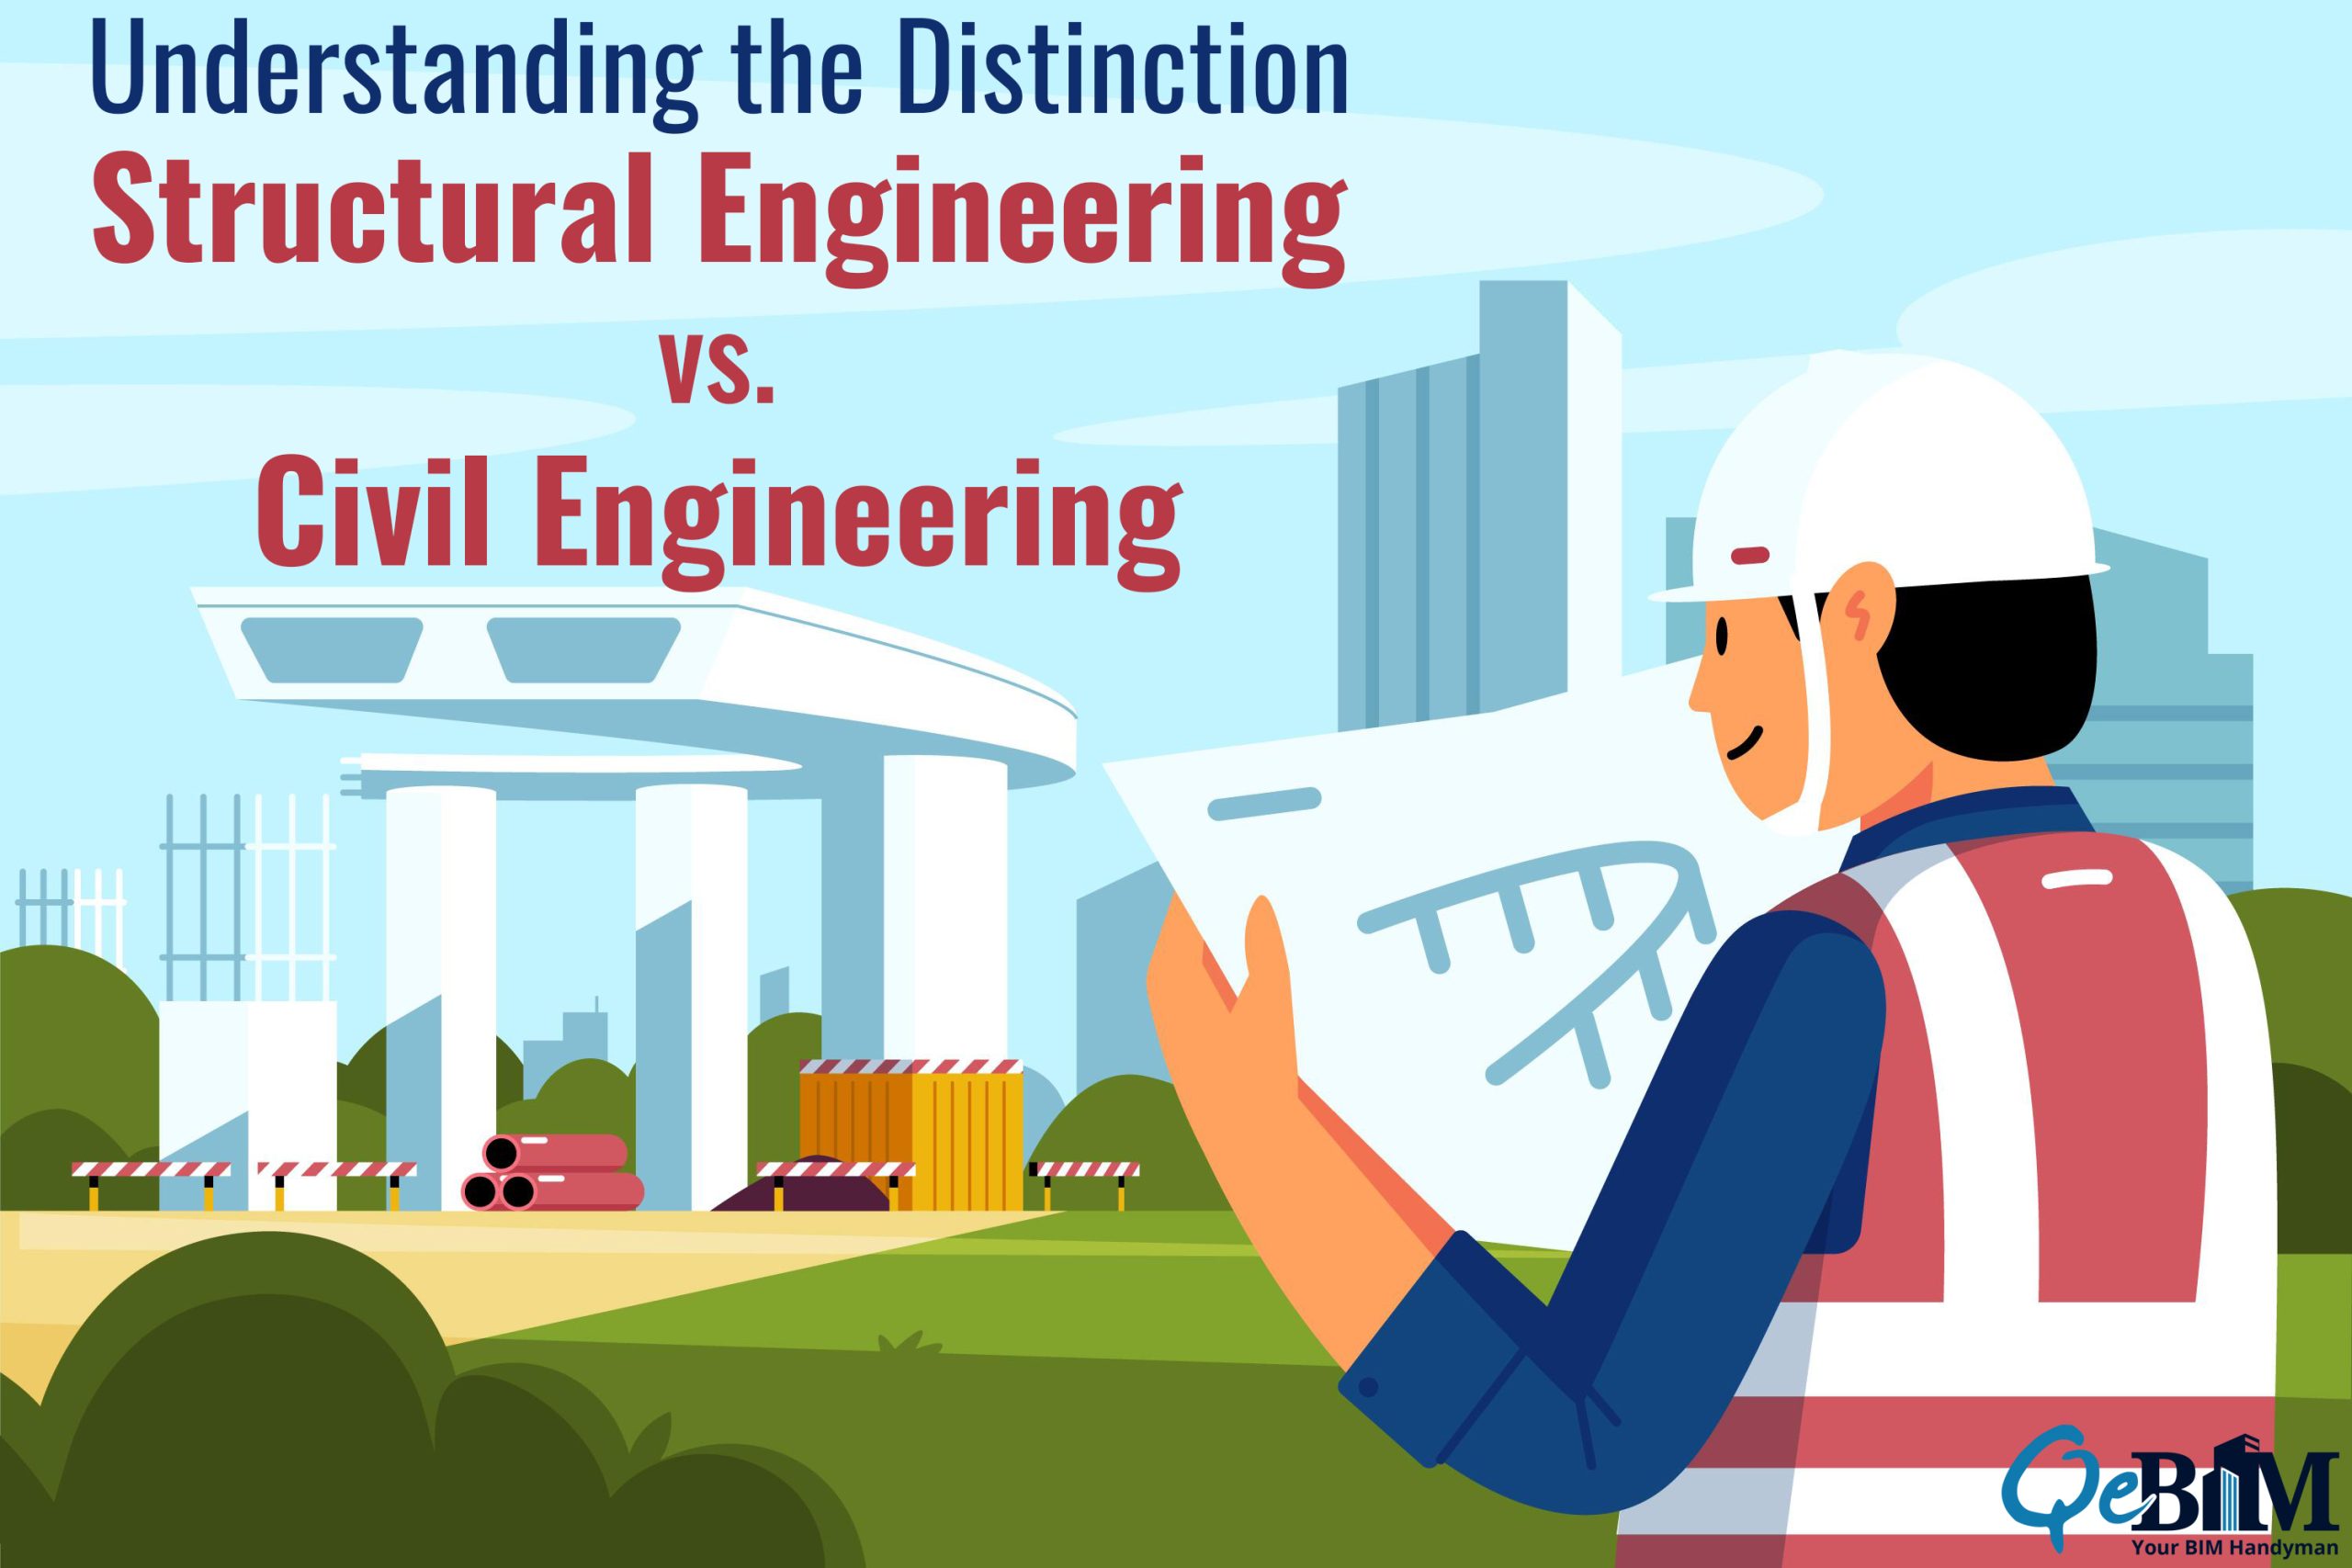 Understanding the Distinction: Structural Engineering vs. Civil Engineering